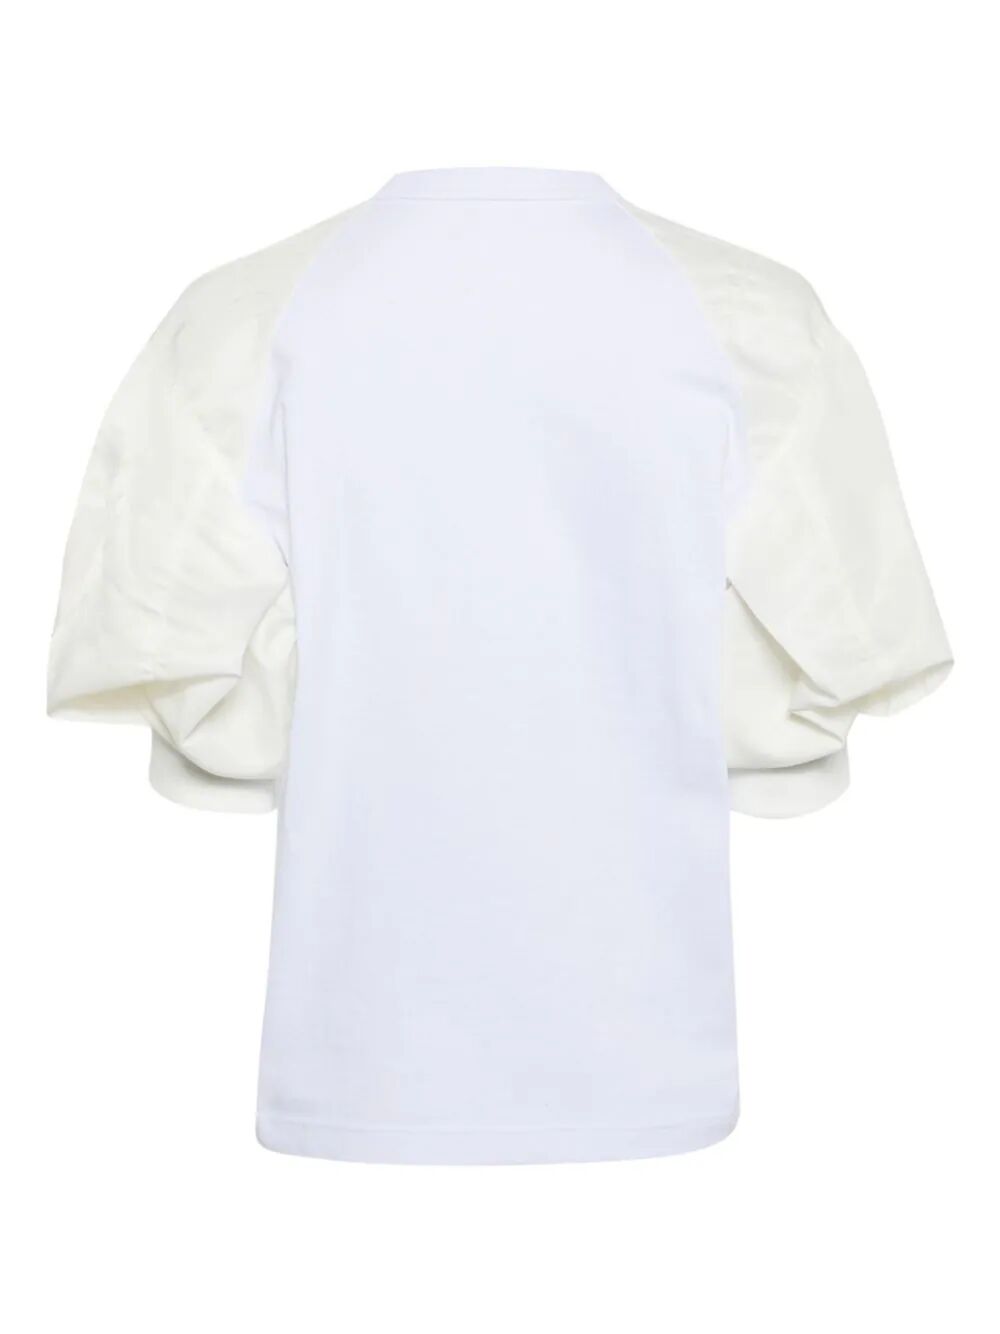 Nylon Twill X Cotton Jersey T-shirt